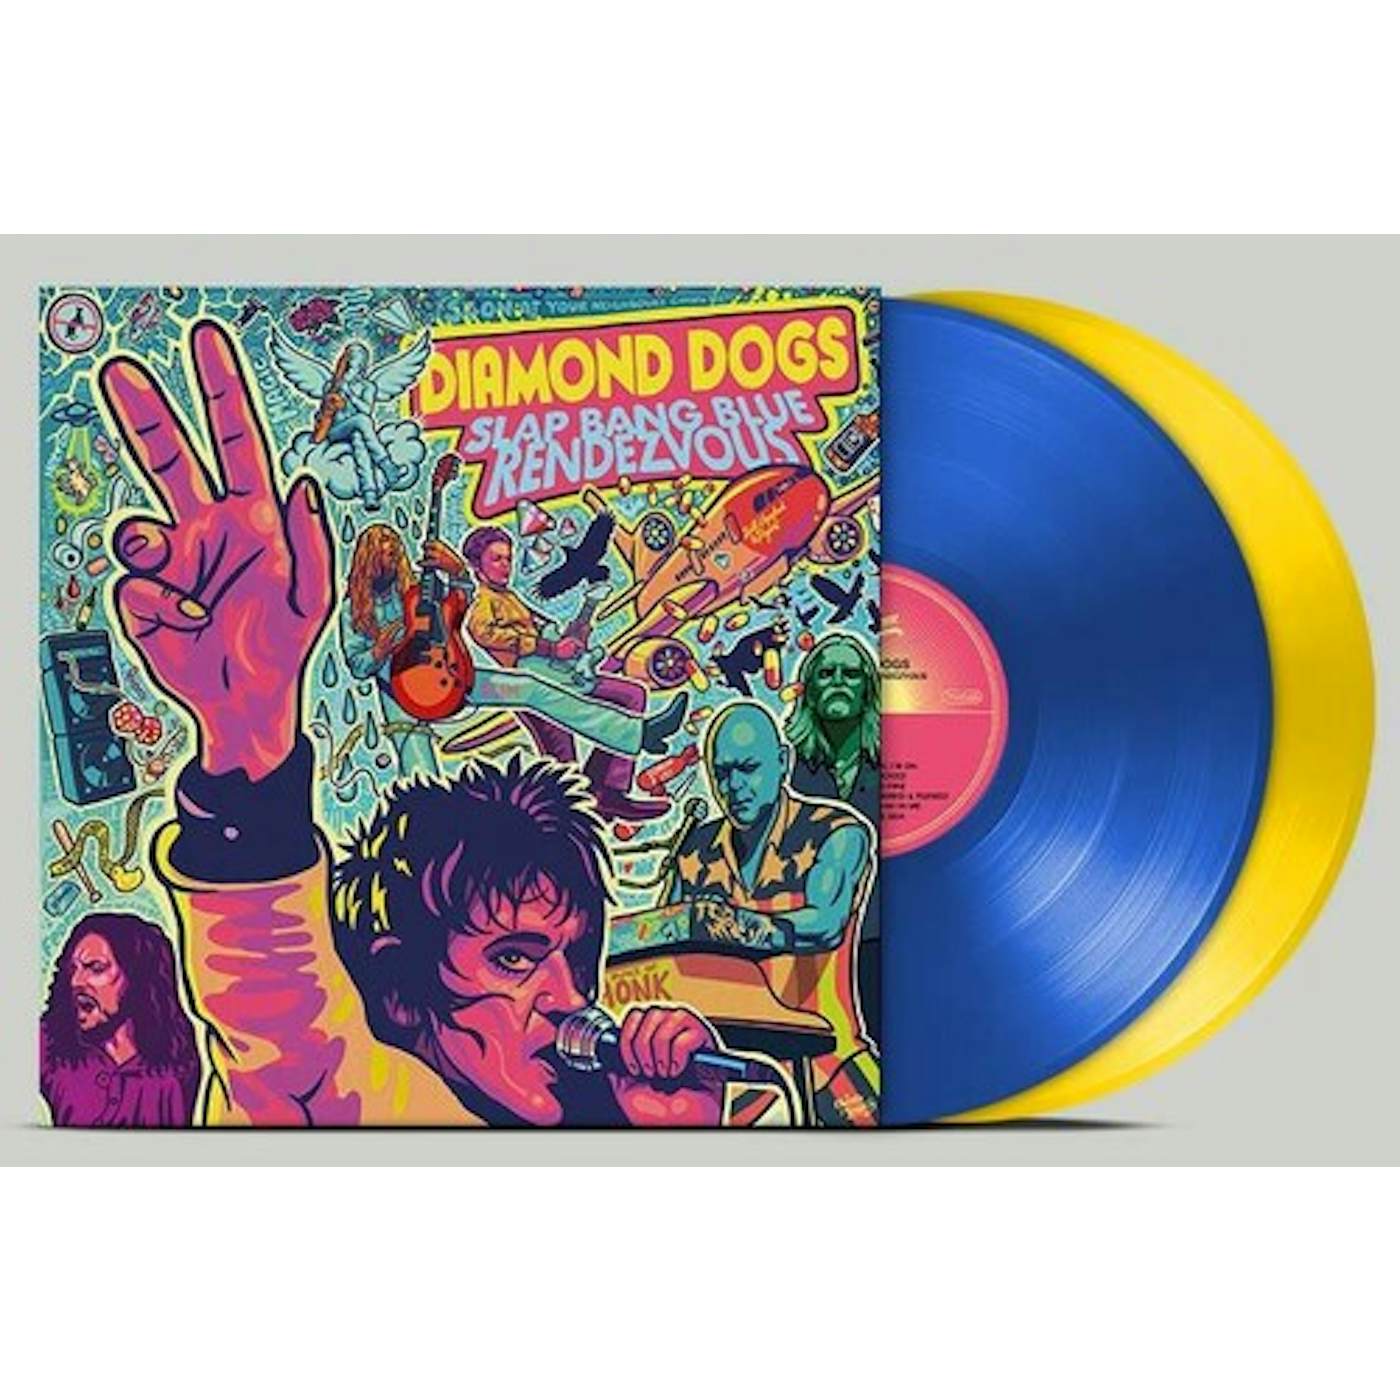 Diamond Dogs SLAP BANG BLUE RENDEZVOUS (BLUE YELLOW VINYL) Vinyl Record